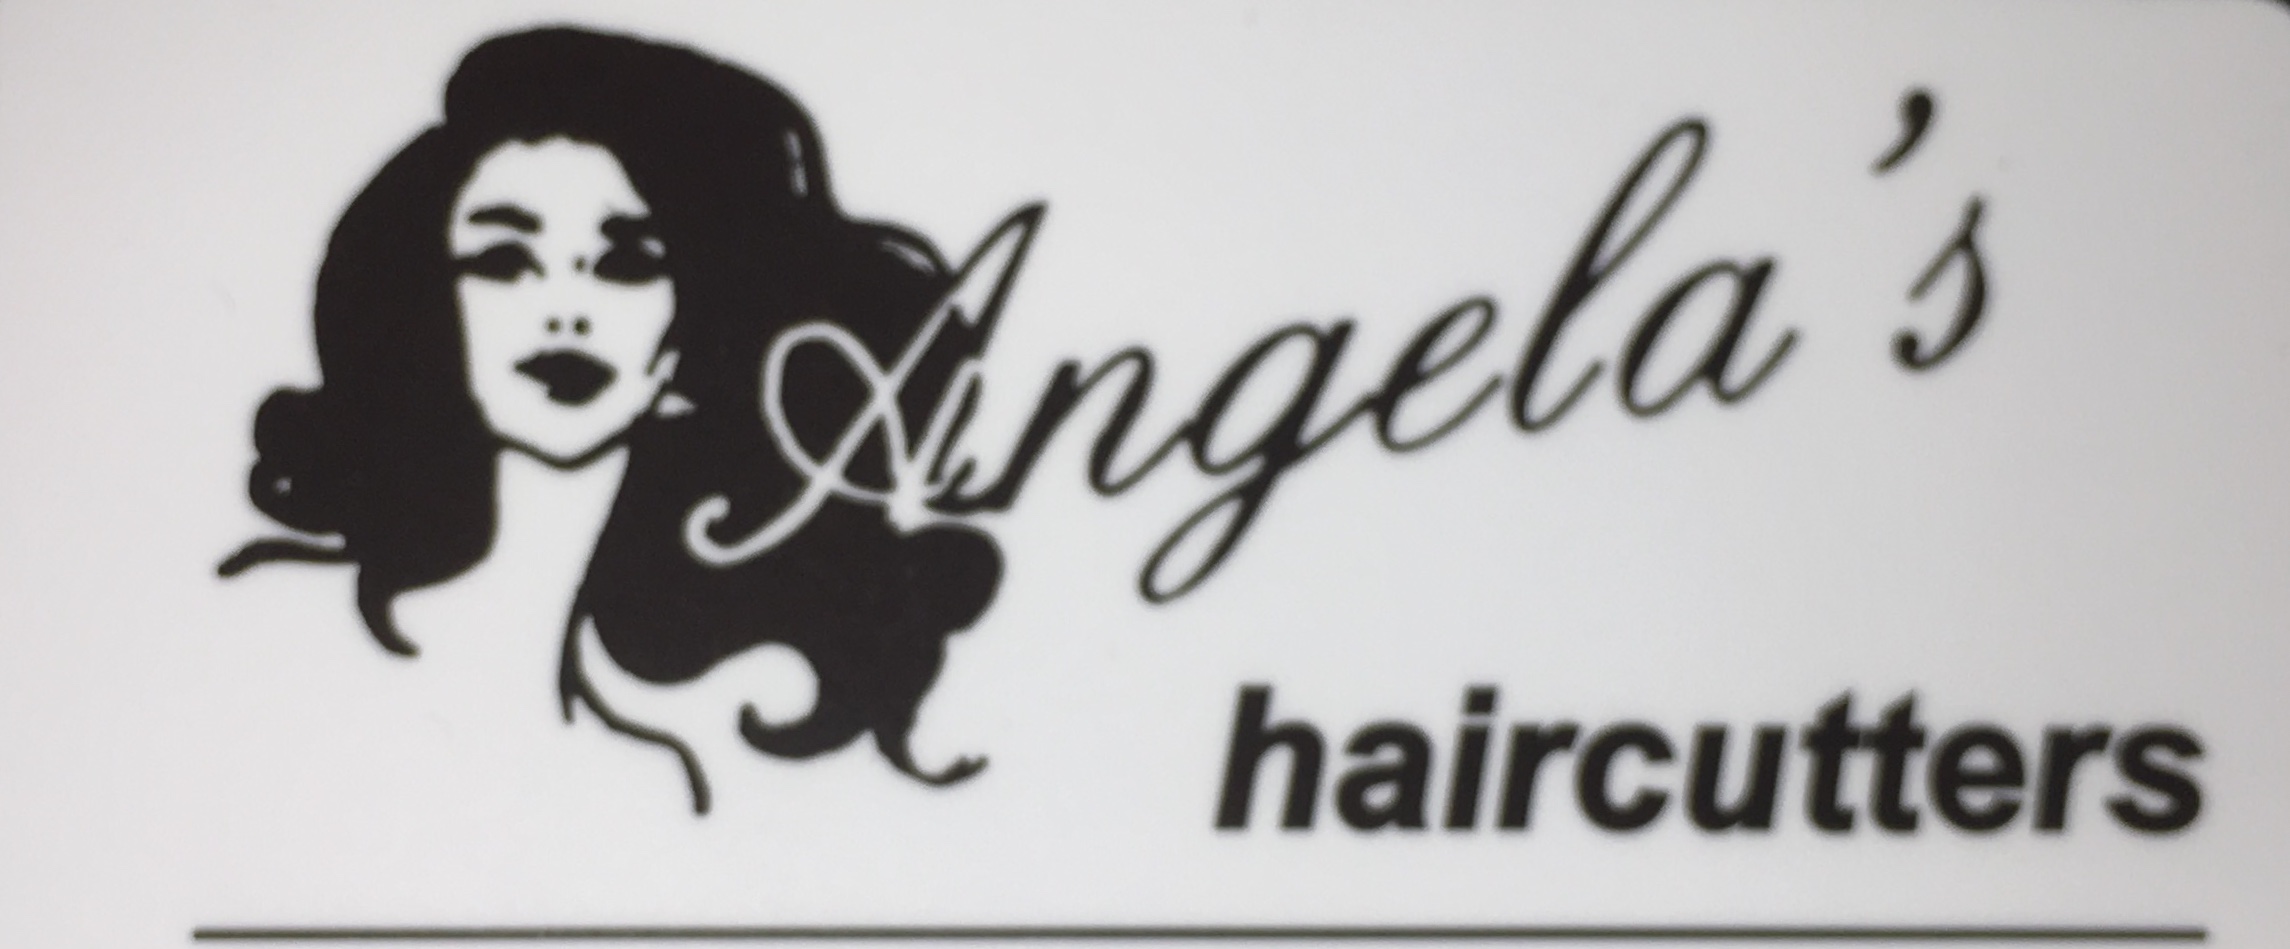 Angela's Haircutters